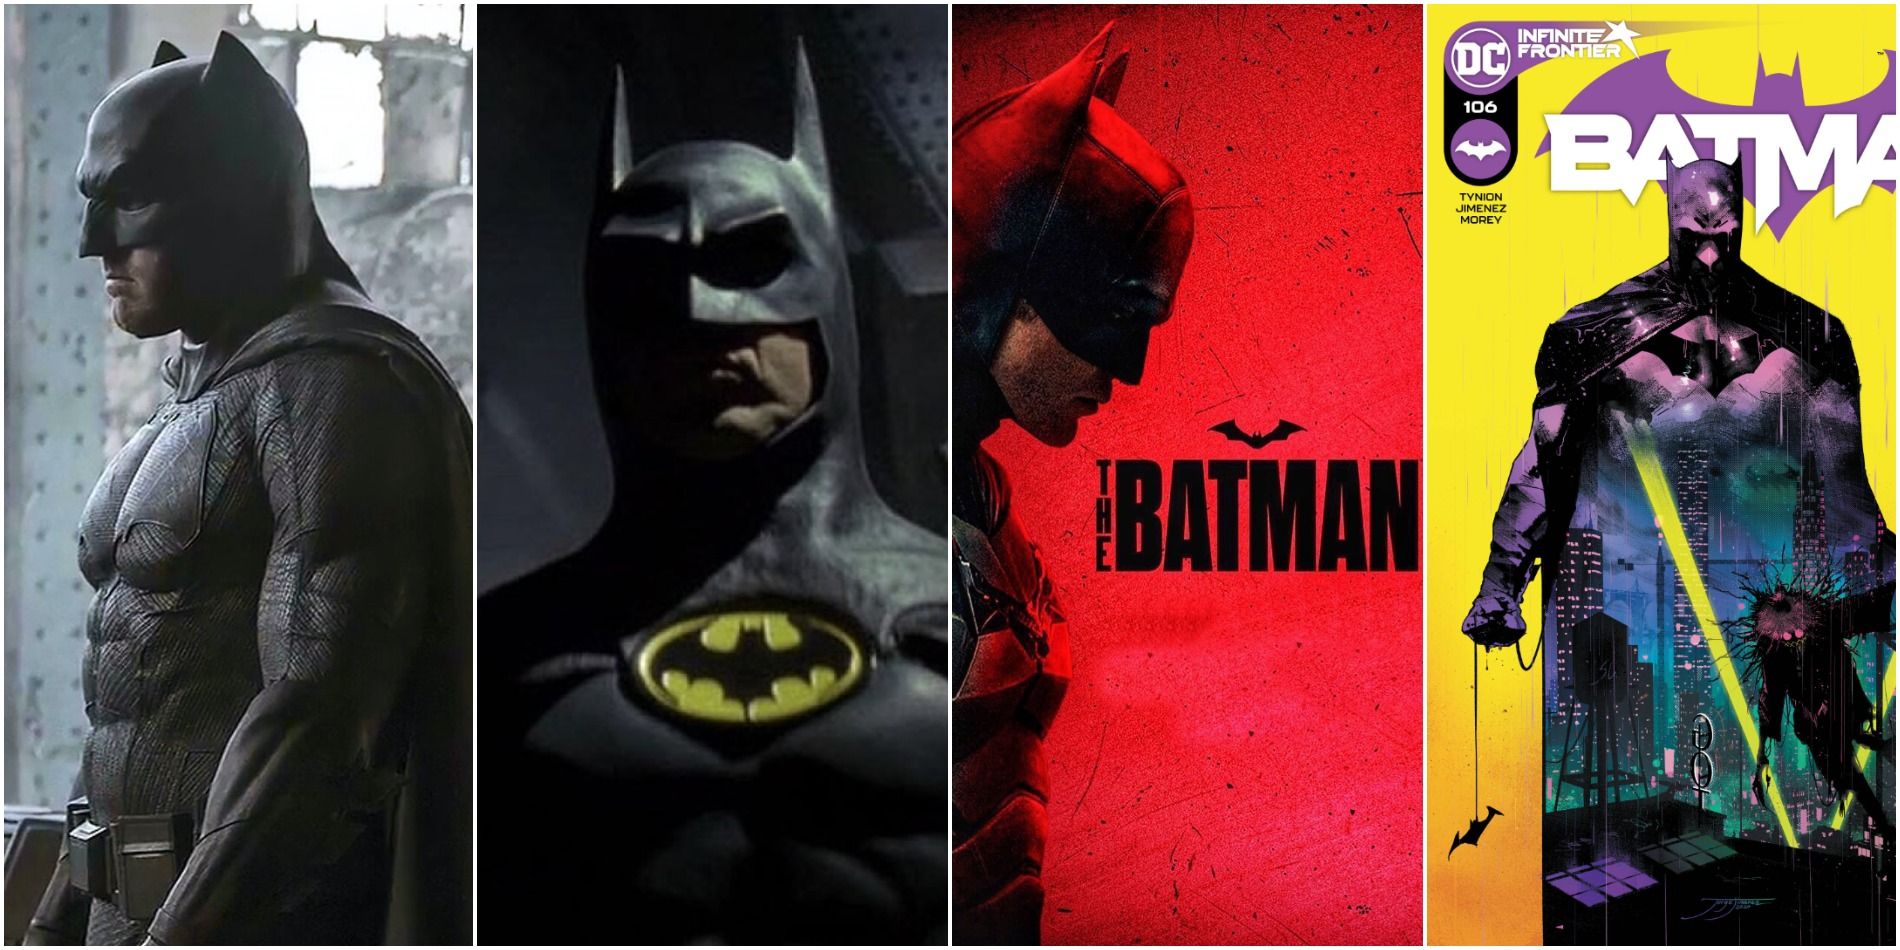 Ben Affleck, Michael Keaton and Robert Pattinson as their respective Batmen, and cover art for James Tynion IV and Jorge Jimenez's Batman #106